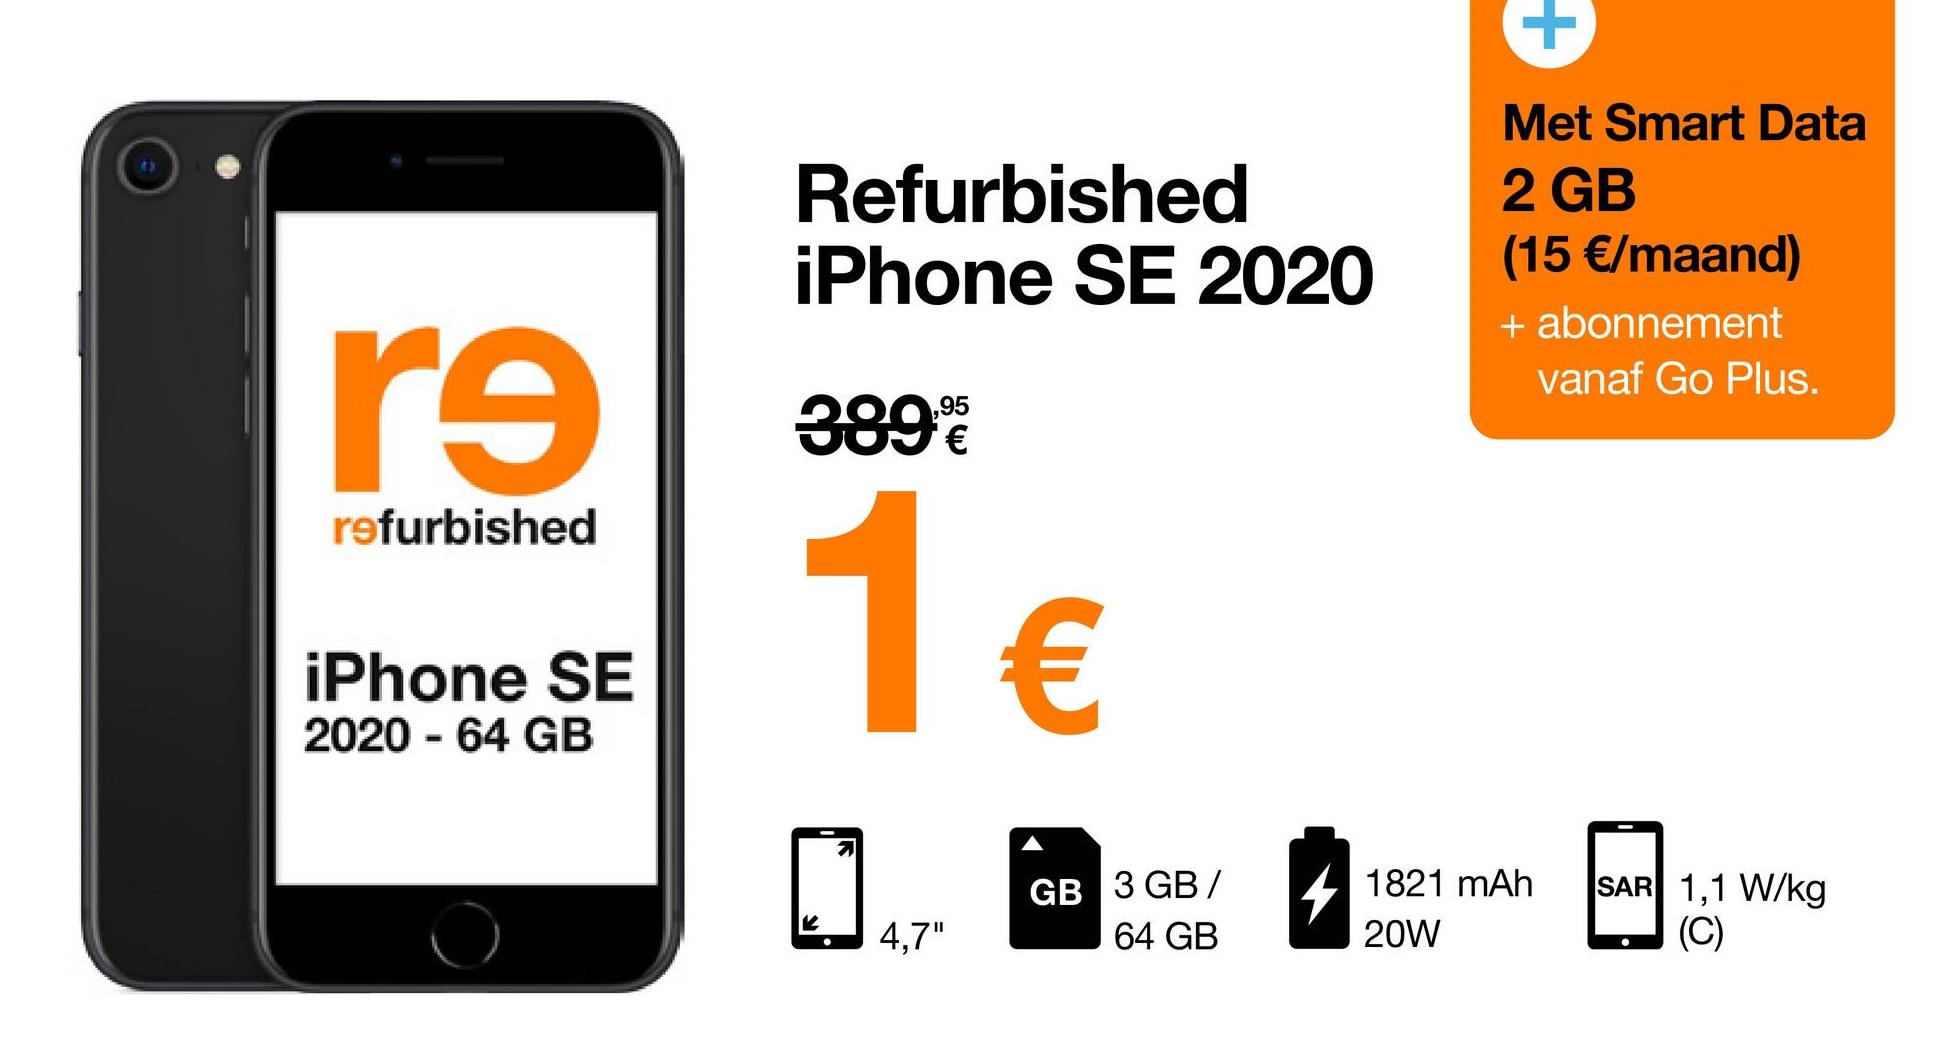 re
9
refurbished
iPhone SE
2020 - 64 GB
Refurbished
iPhone SE 2020
389%
1€
21
K
4,7"
GB 3 GB/
64 GB
Met Smart Data
2 GB
(15 €/maand)
+ abonnement
1821 mAh
20W
vanaf Go Plus.
SAR 1,1 W/kg
(C)